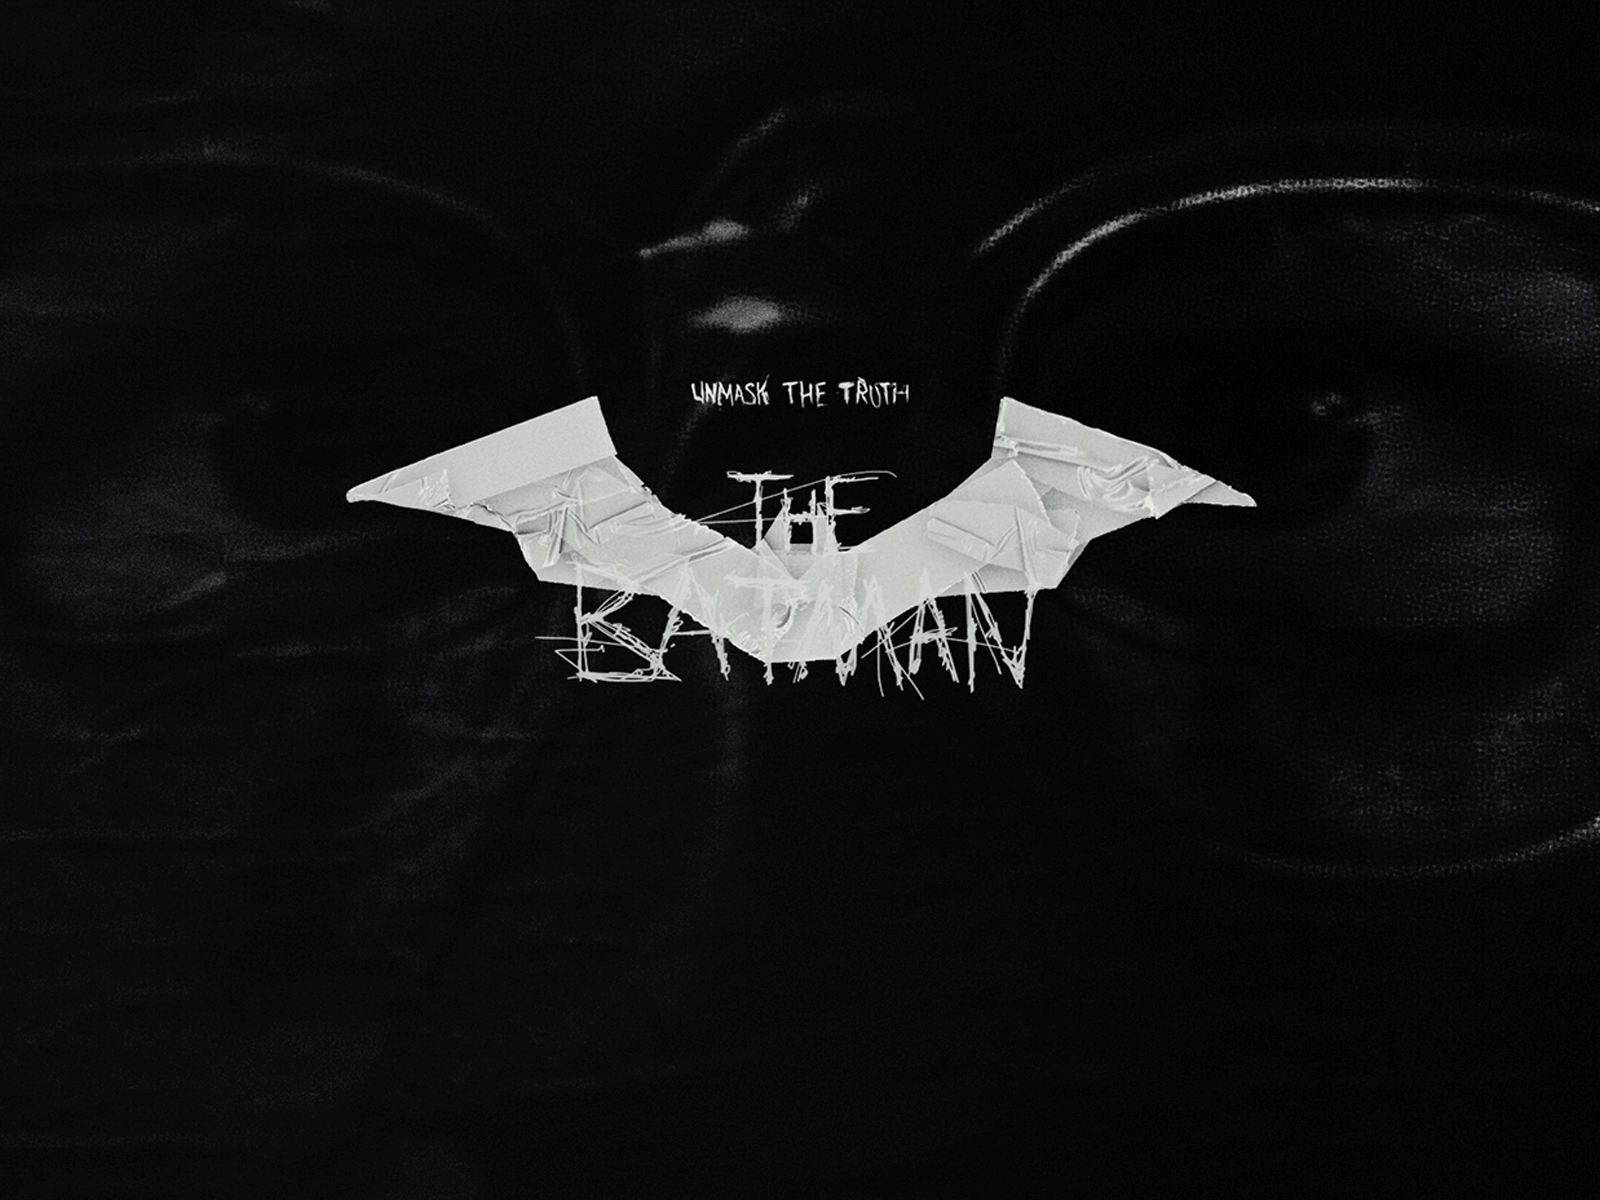 The Batman batman dc comics key art movie poster movie posters movies poster poster design posters robert pattinson the batman